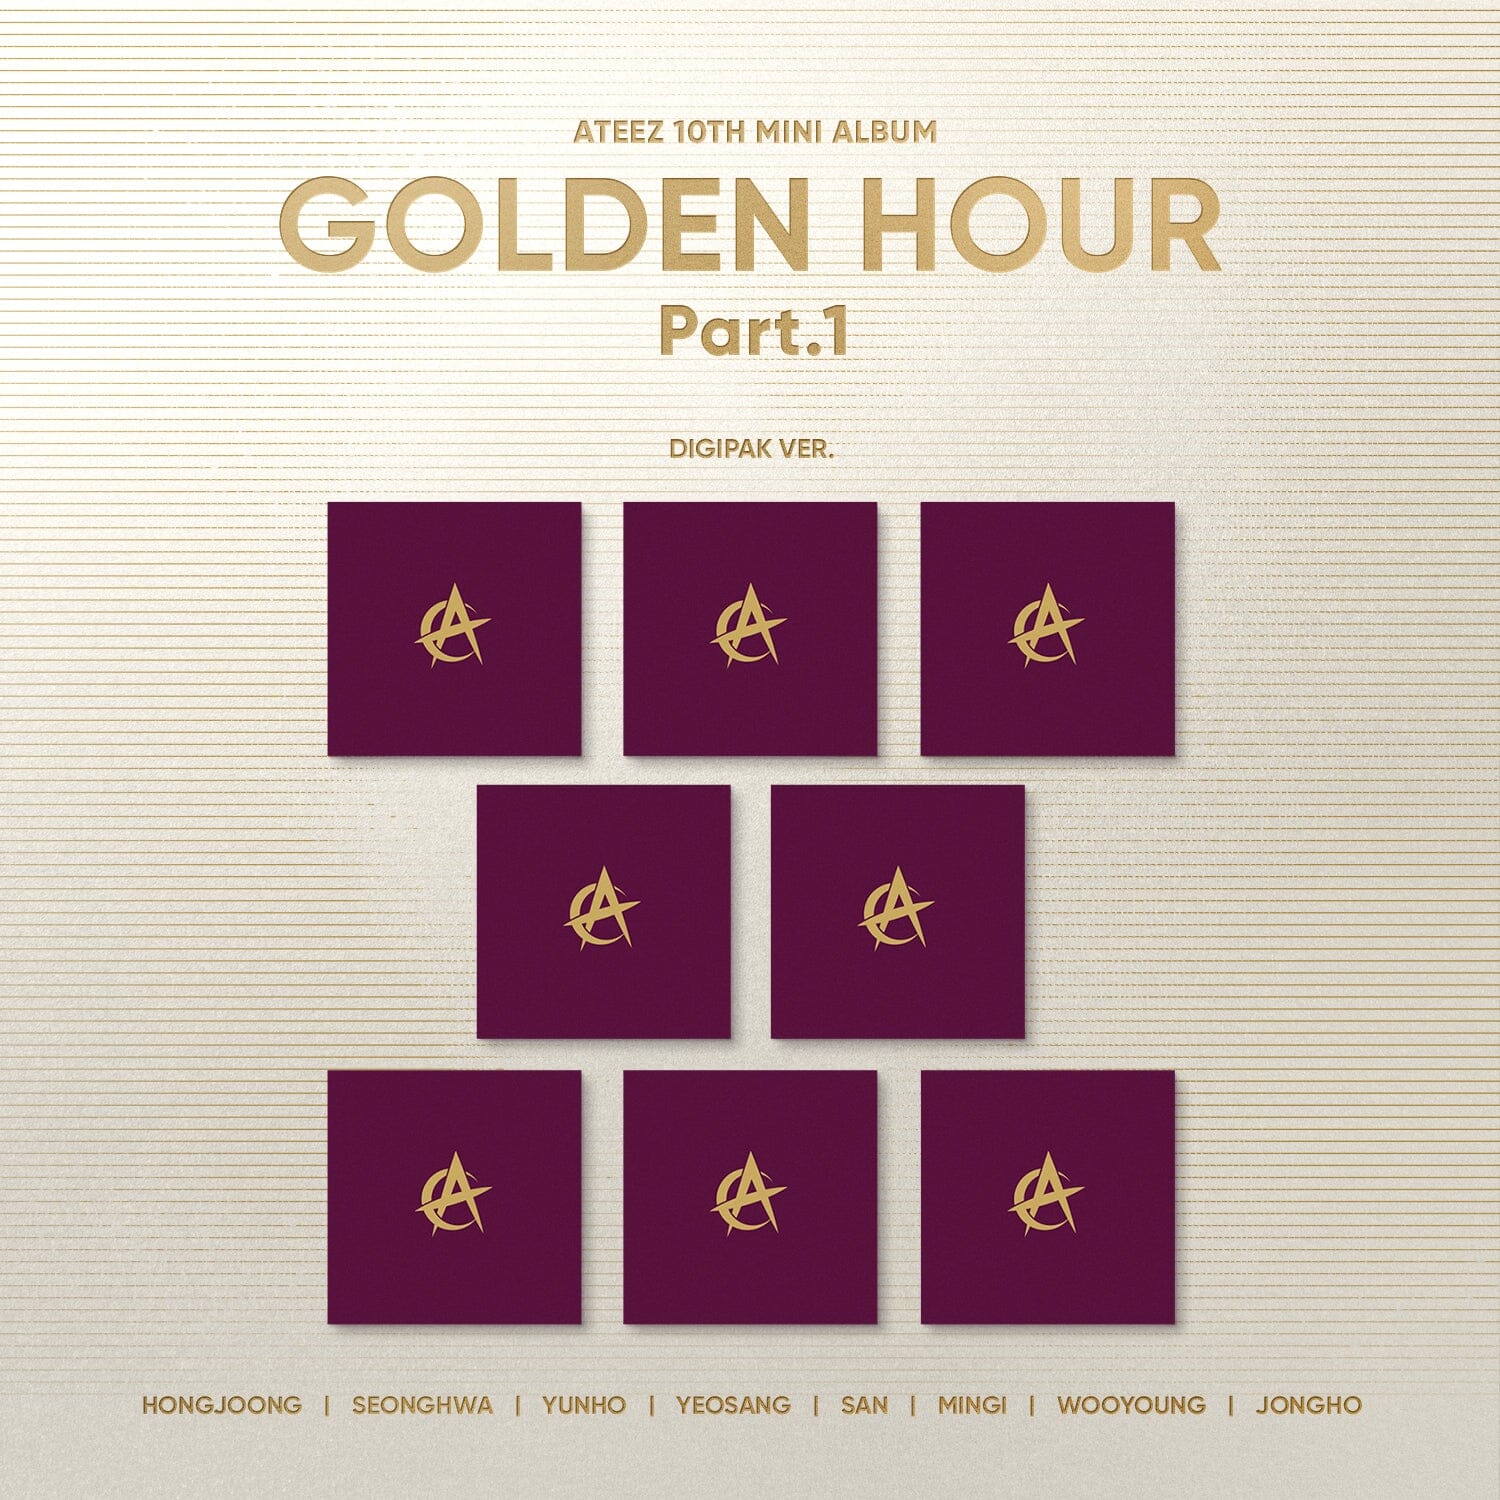 ATEEZ - GOLDEN HOUR : PART 1 (10TH MINI ALBUM) DIGIPAK VER. Nolae